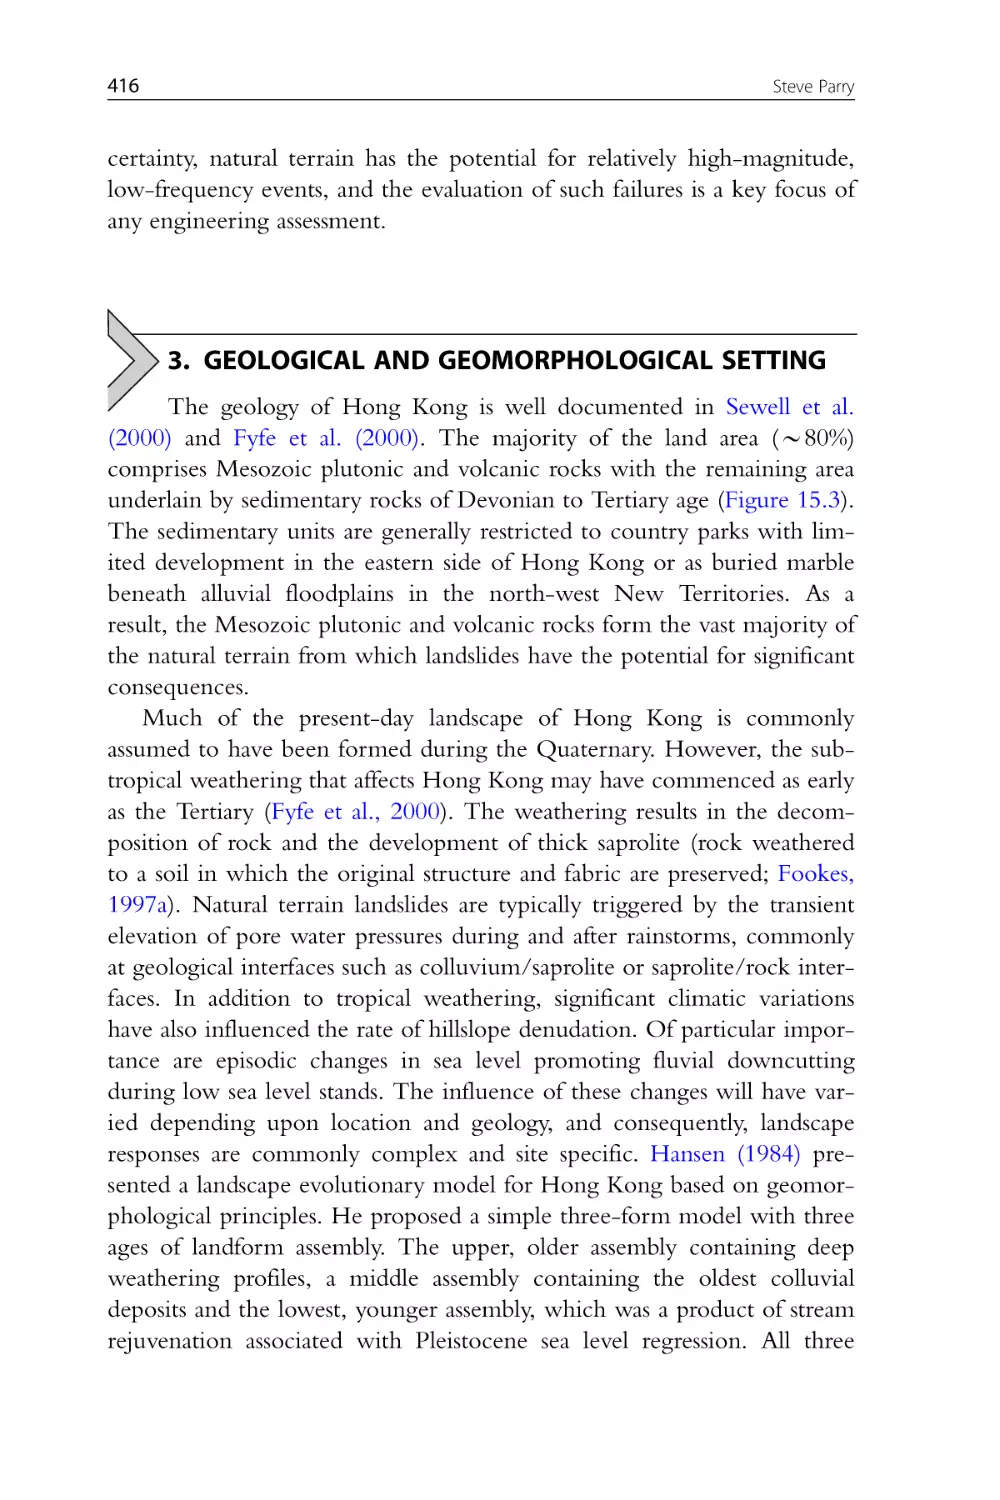 3. Geological and Geomorphological Setting